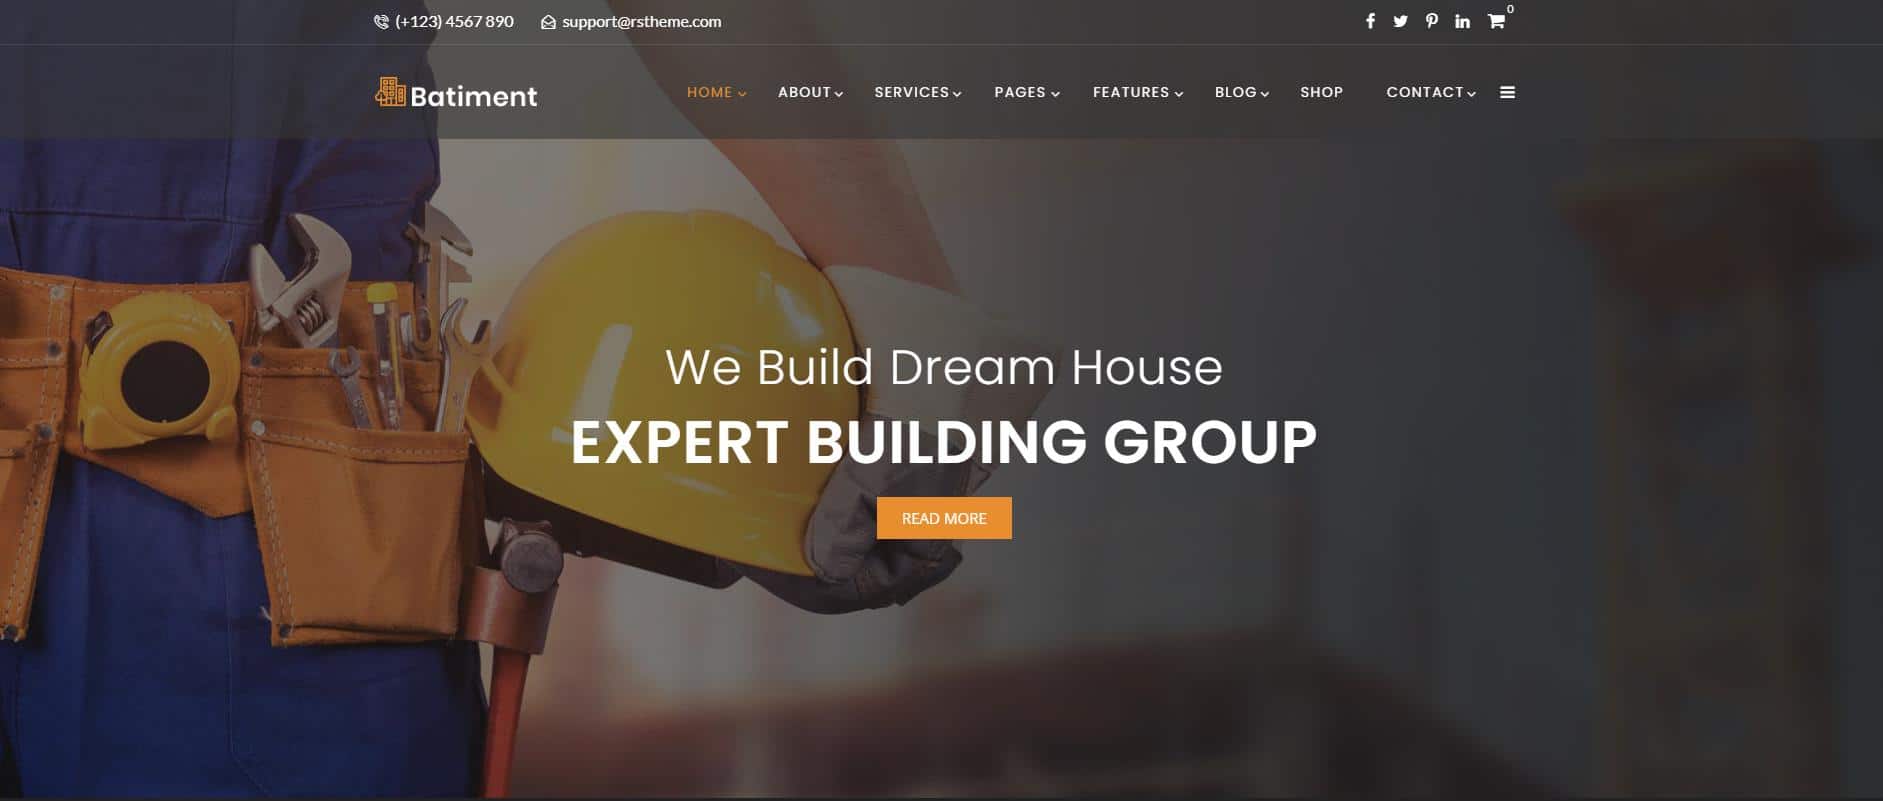 Construction & Building Website Design